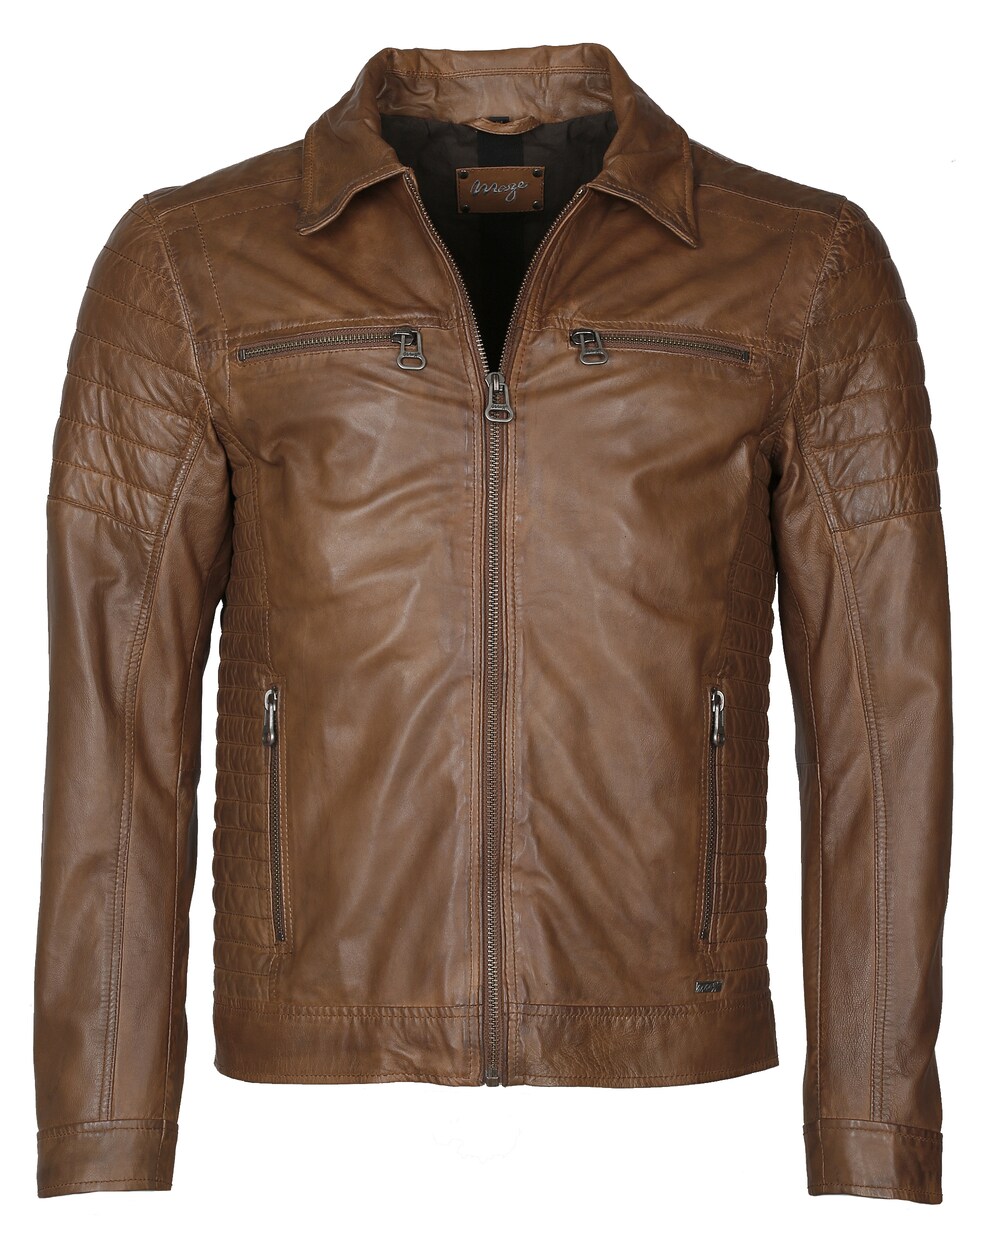 Межсезонная куртка Maze William, коричневый